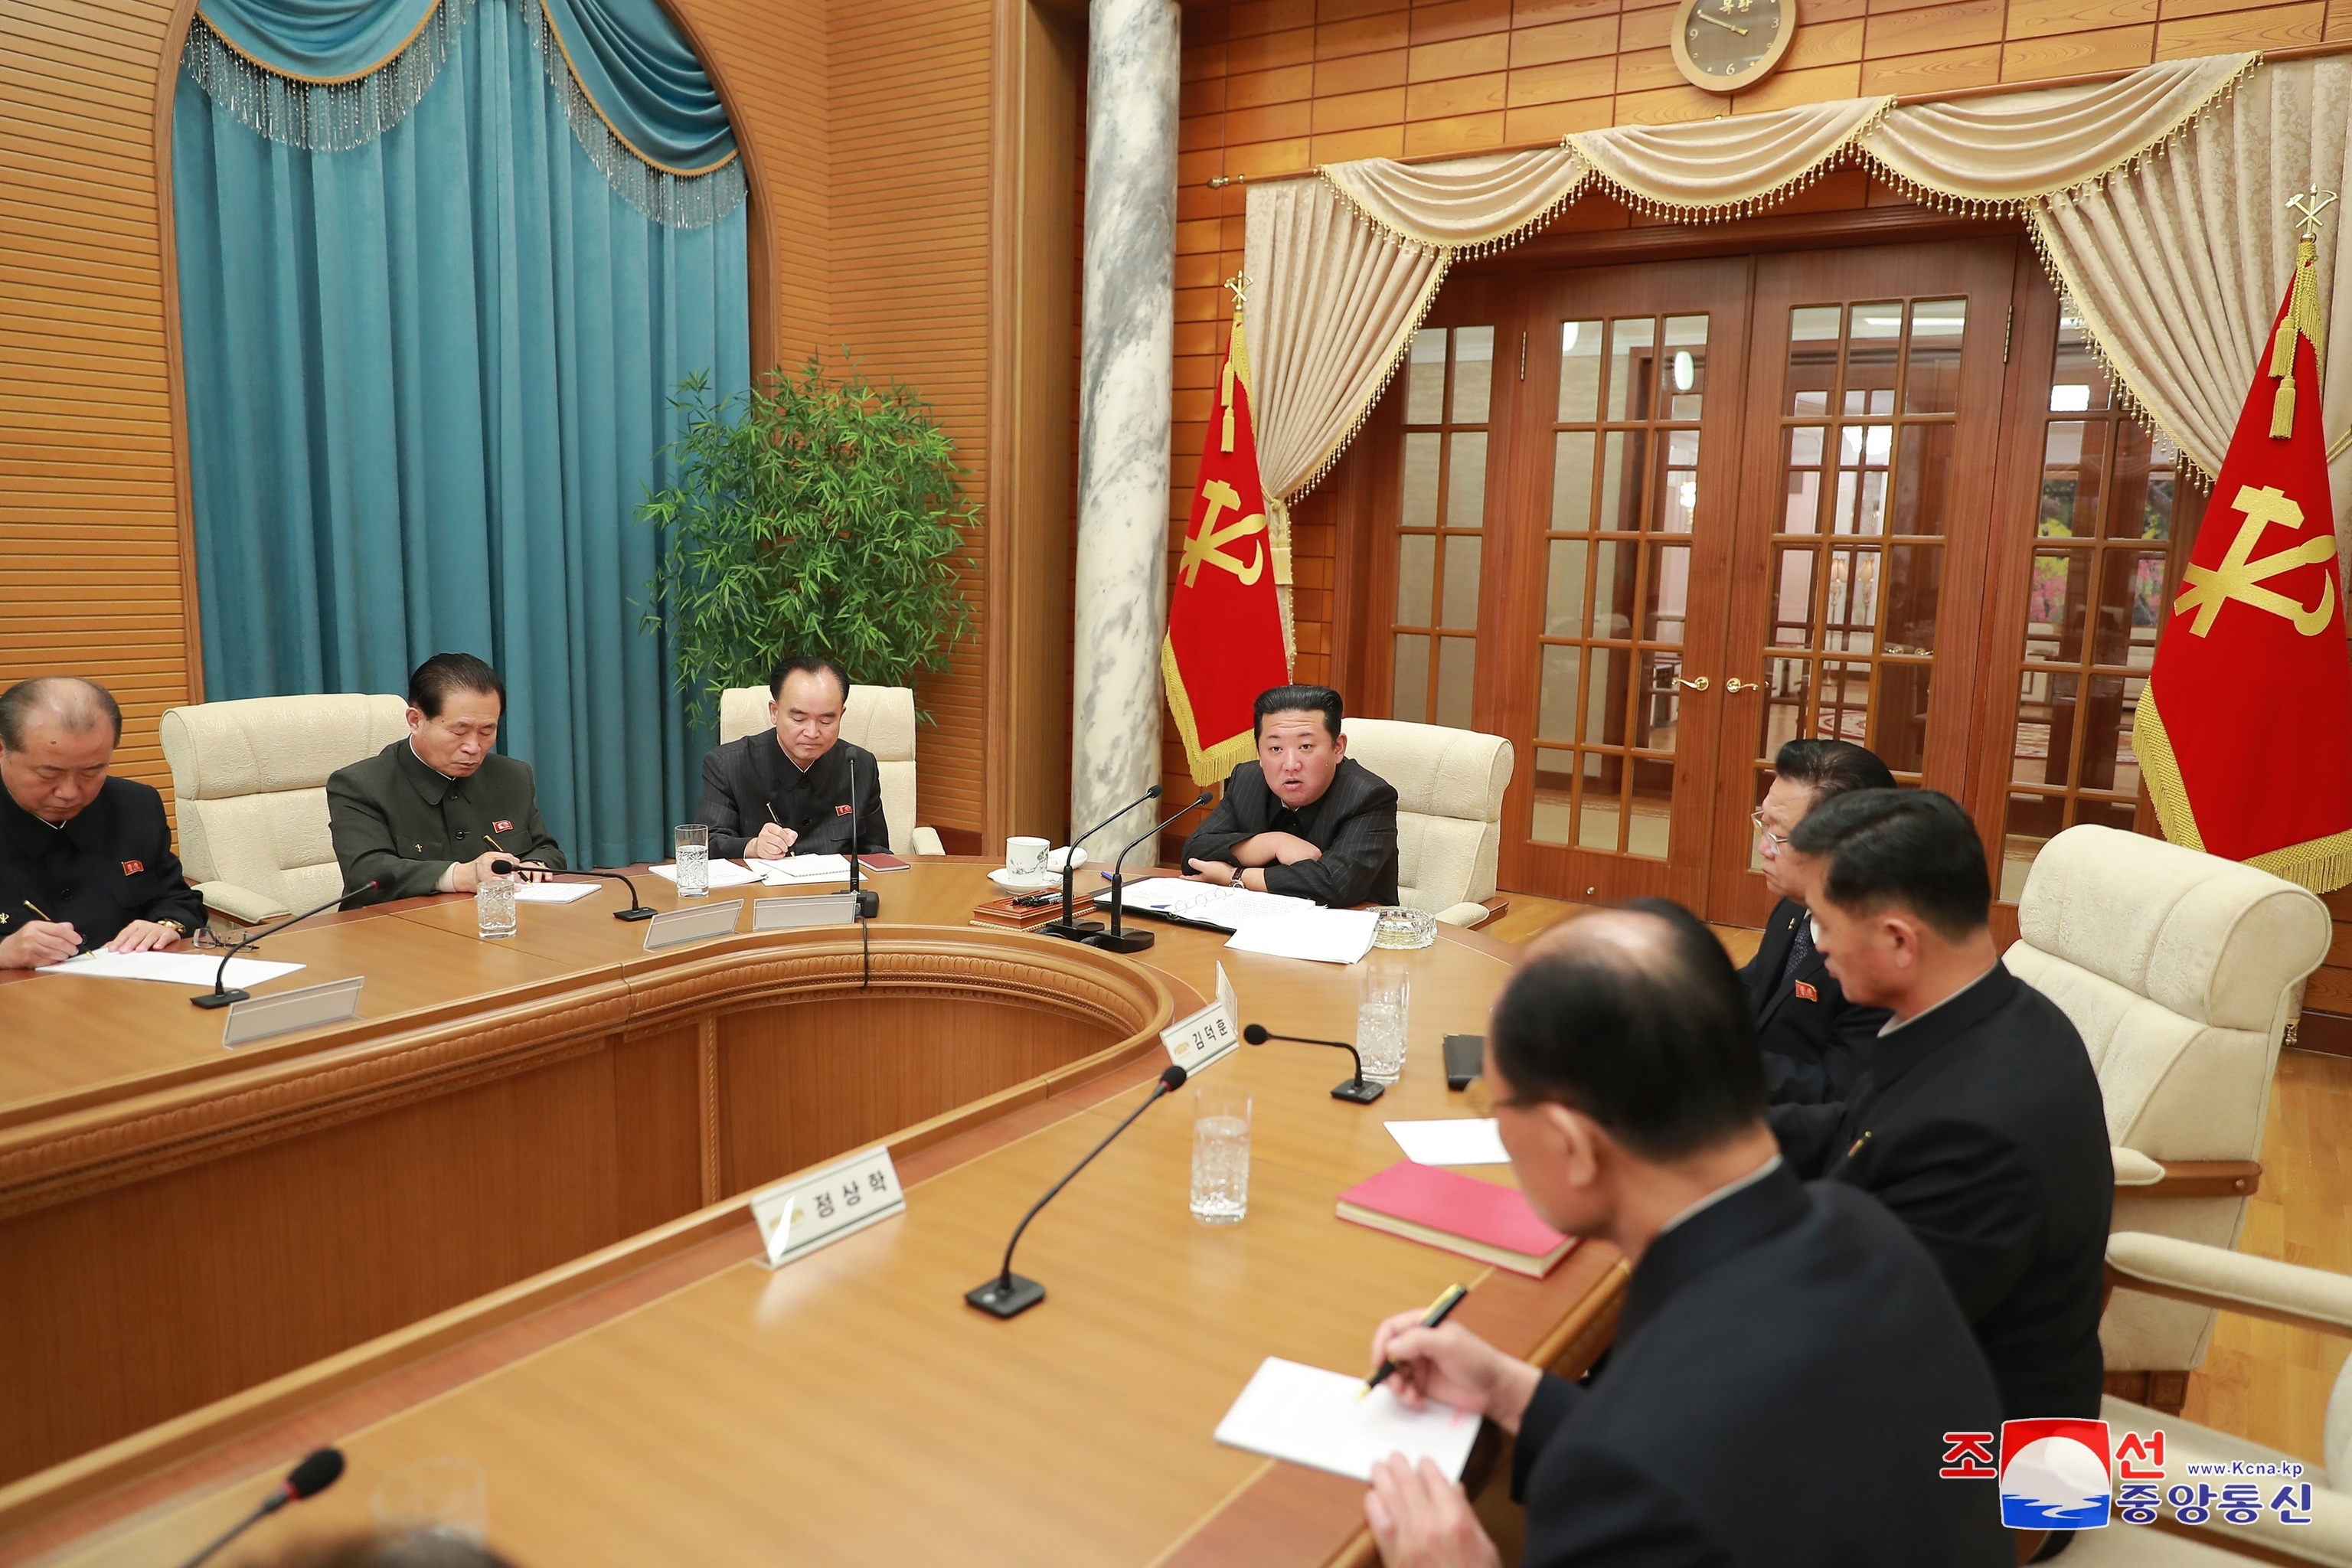 Kim Yong-un chairs the meeting